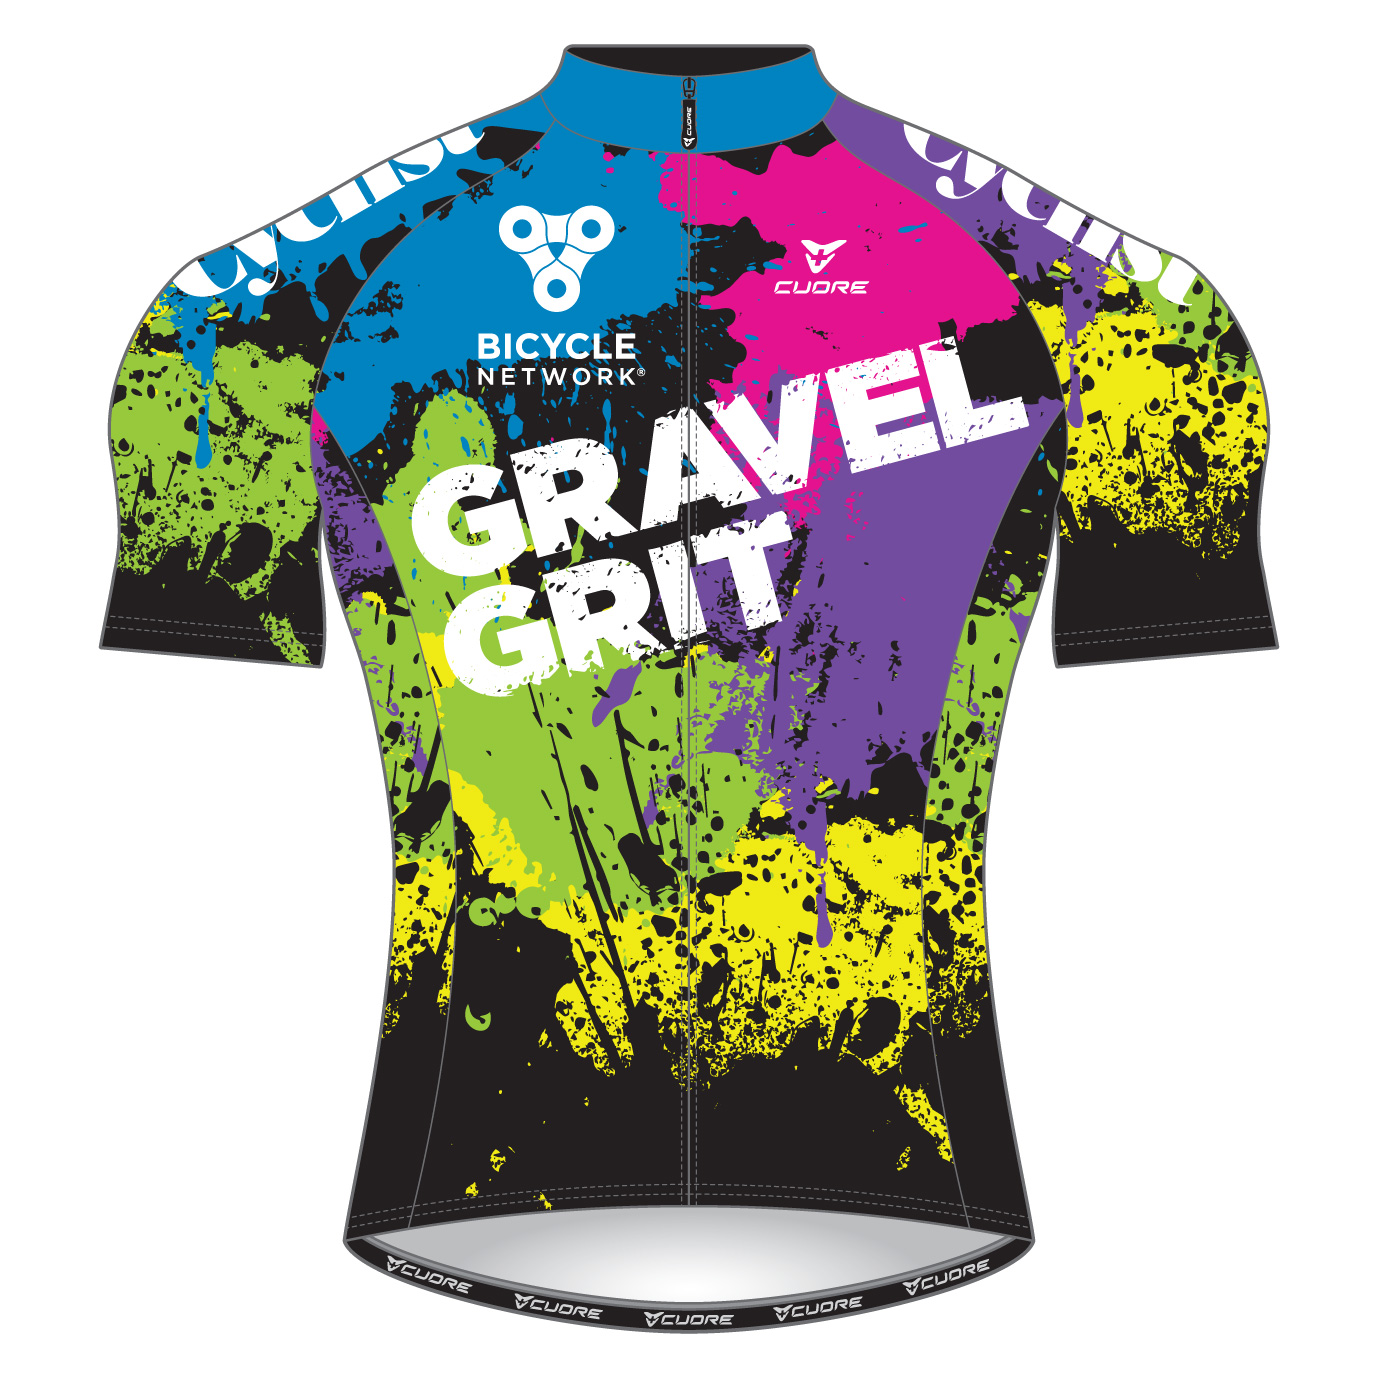 Gravel Grit Laguna Cuore jersey - front